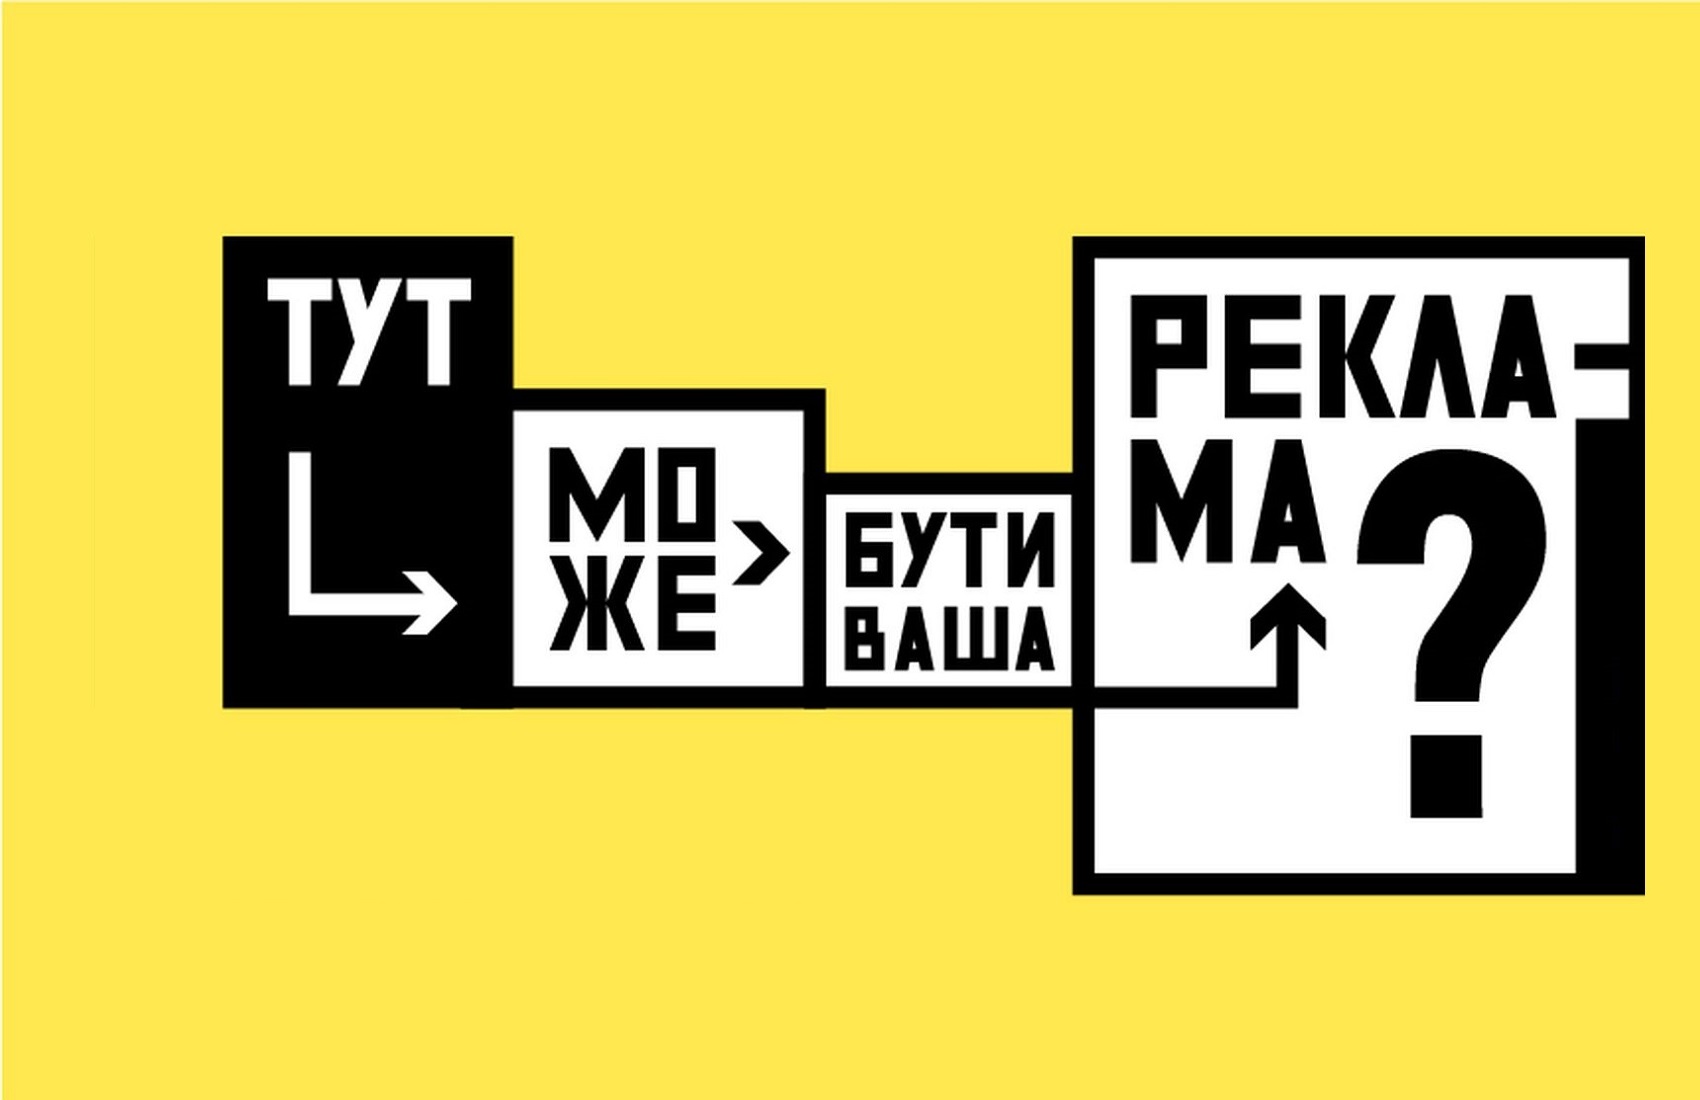 Вся реклама должна быть на украинском языке с 16 января — Нацрада